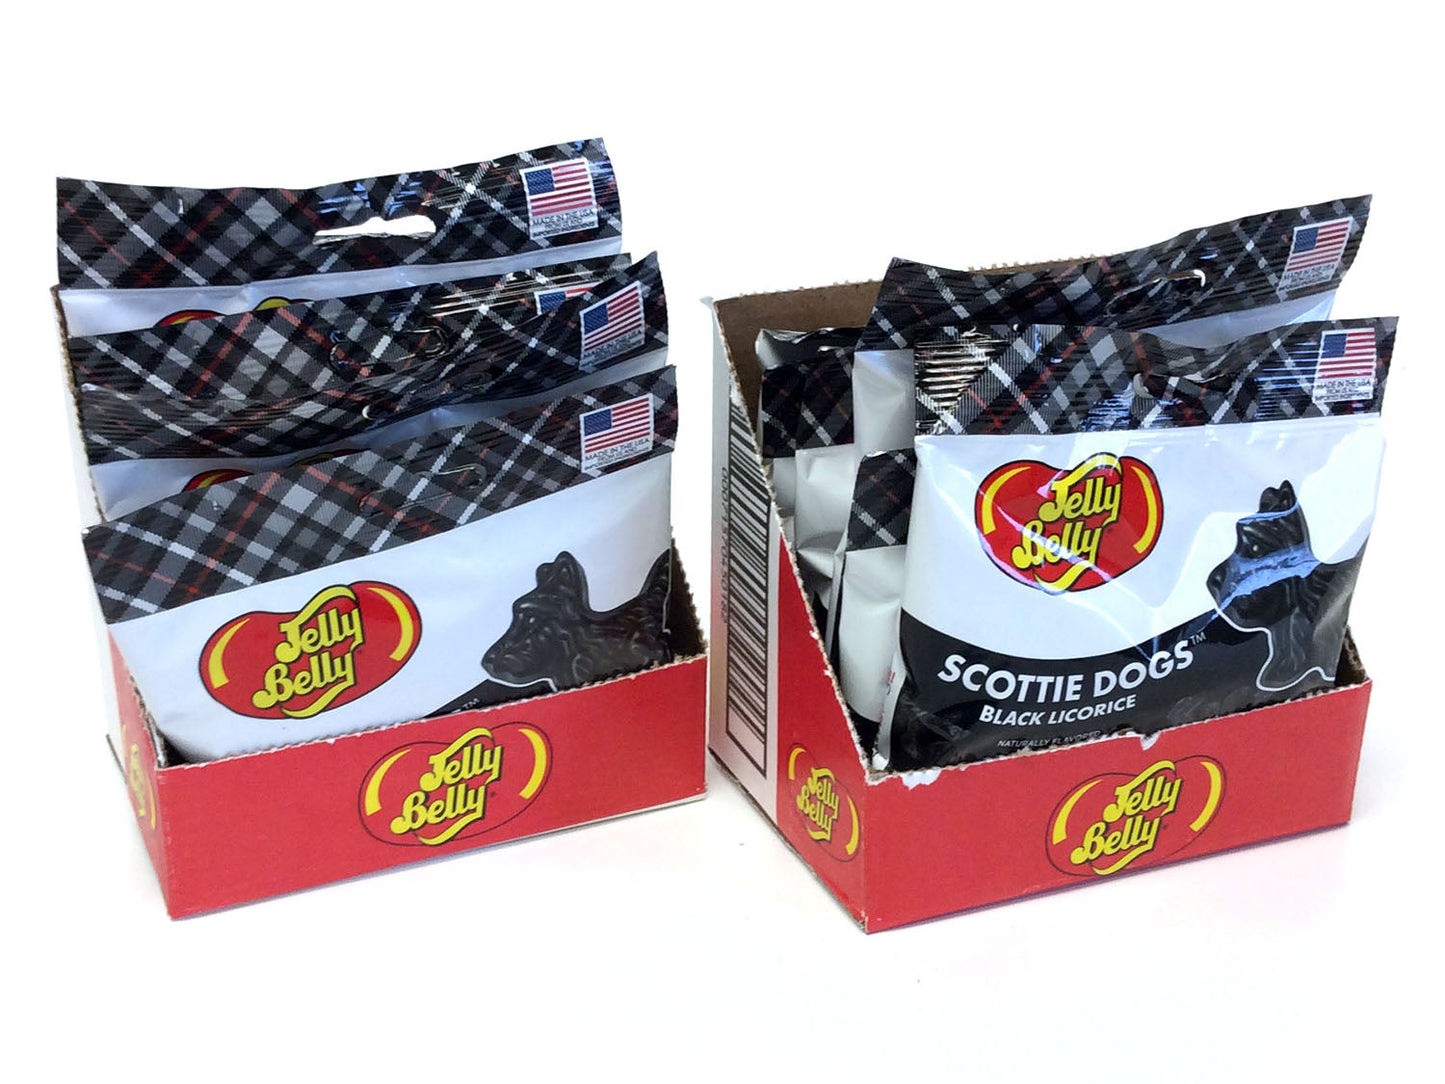 Scottie Dogs - Black Licorice - 2.75 oz bag -  box of 12 - open